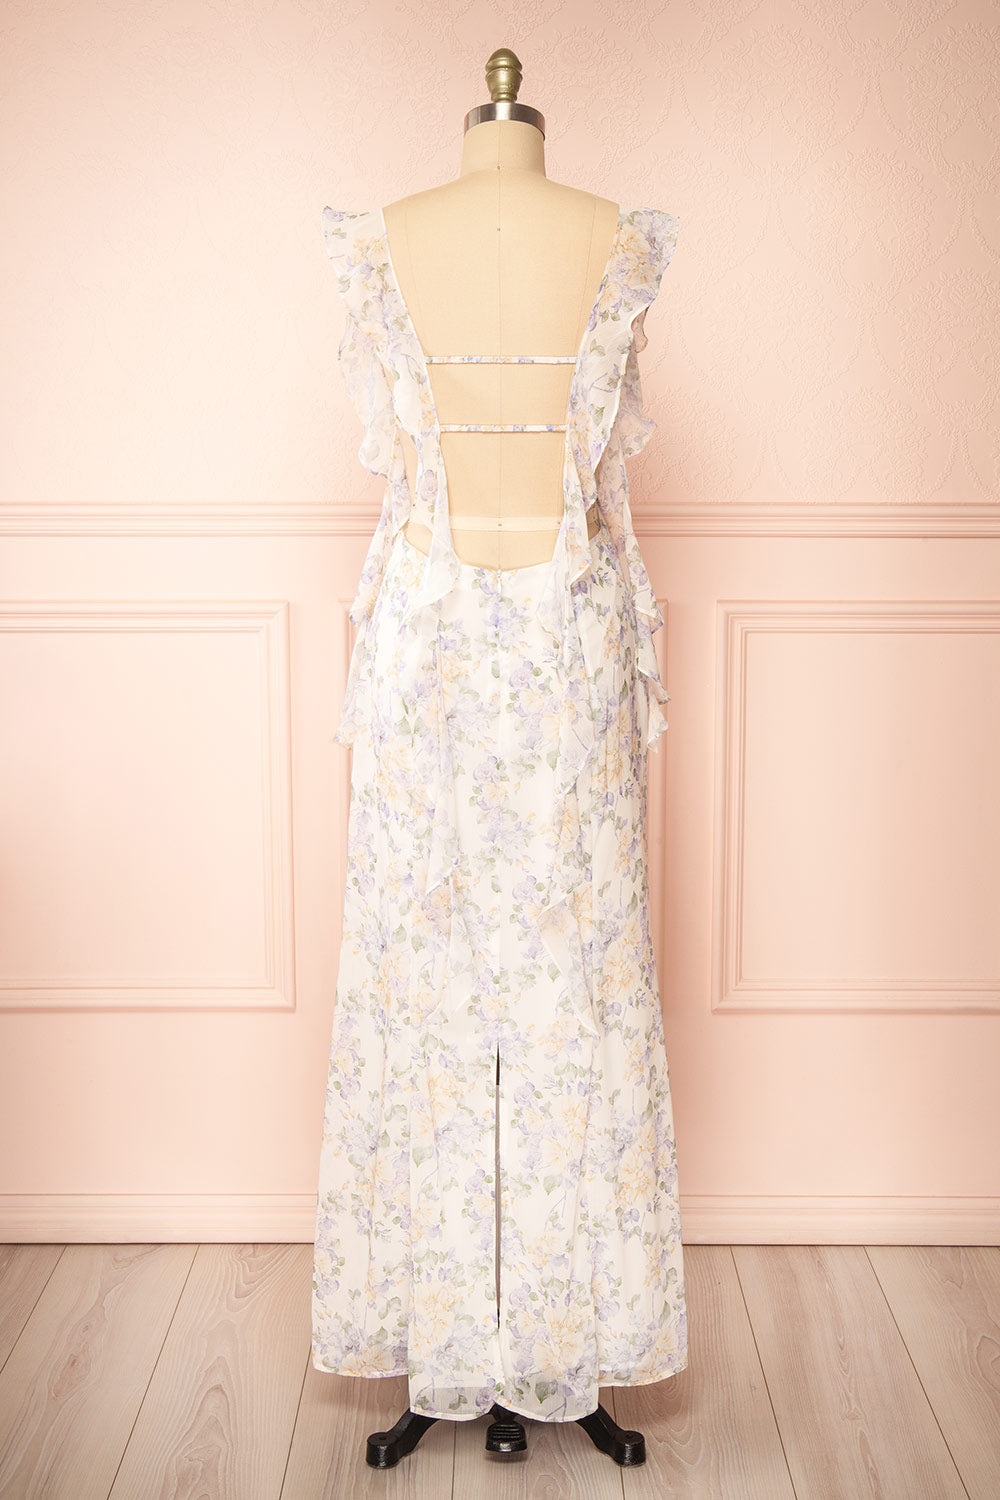 Veronica Floral Maxi Dress w/ Open Back | Boutique 1861 back view